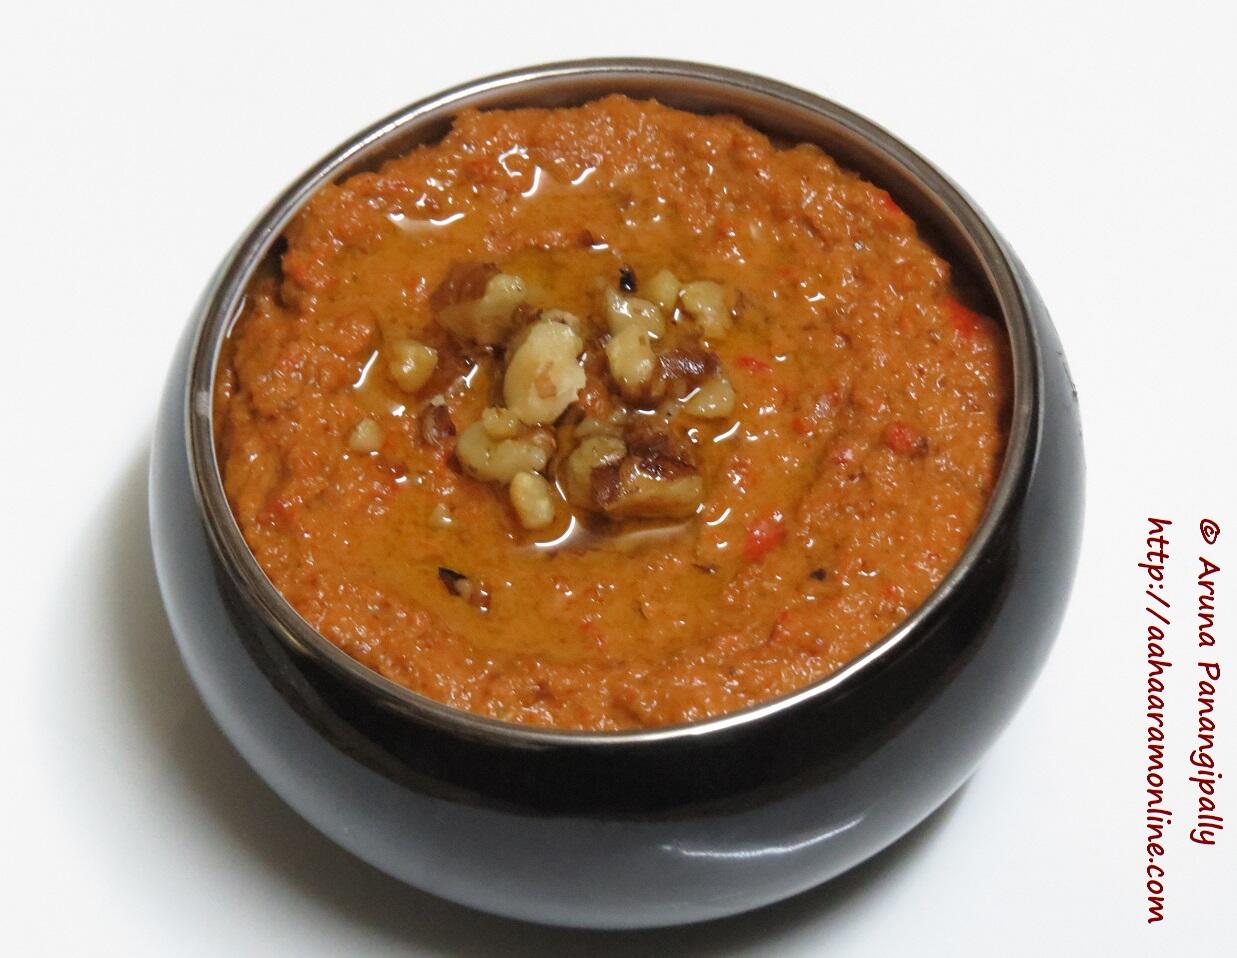 Muhammara - Roasted Red Bell Pepper and Walnut Dip or Chutney